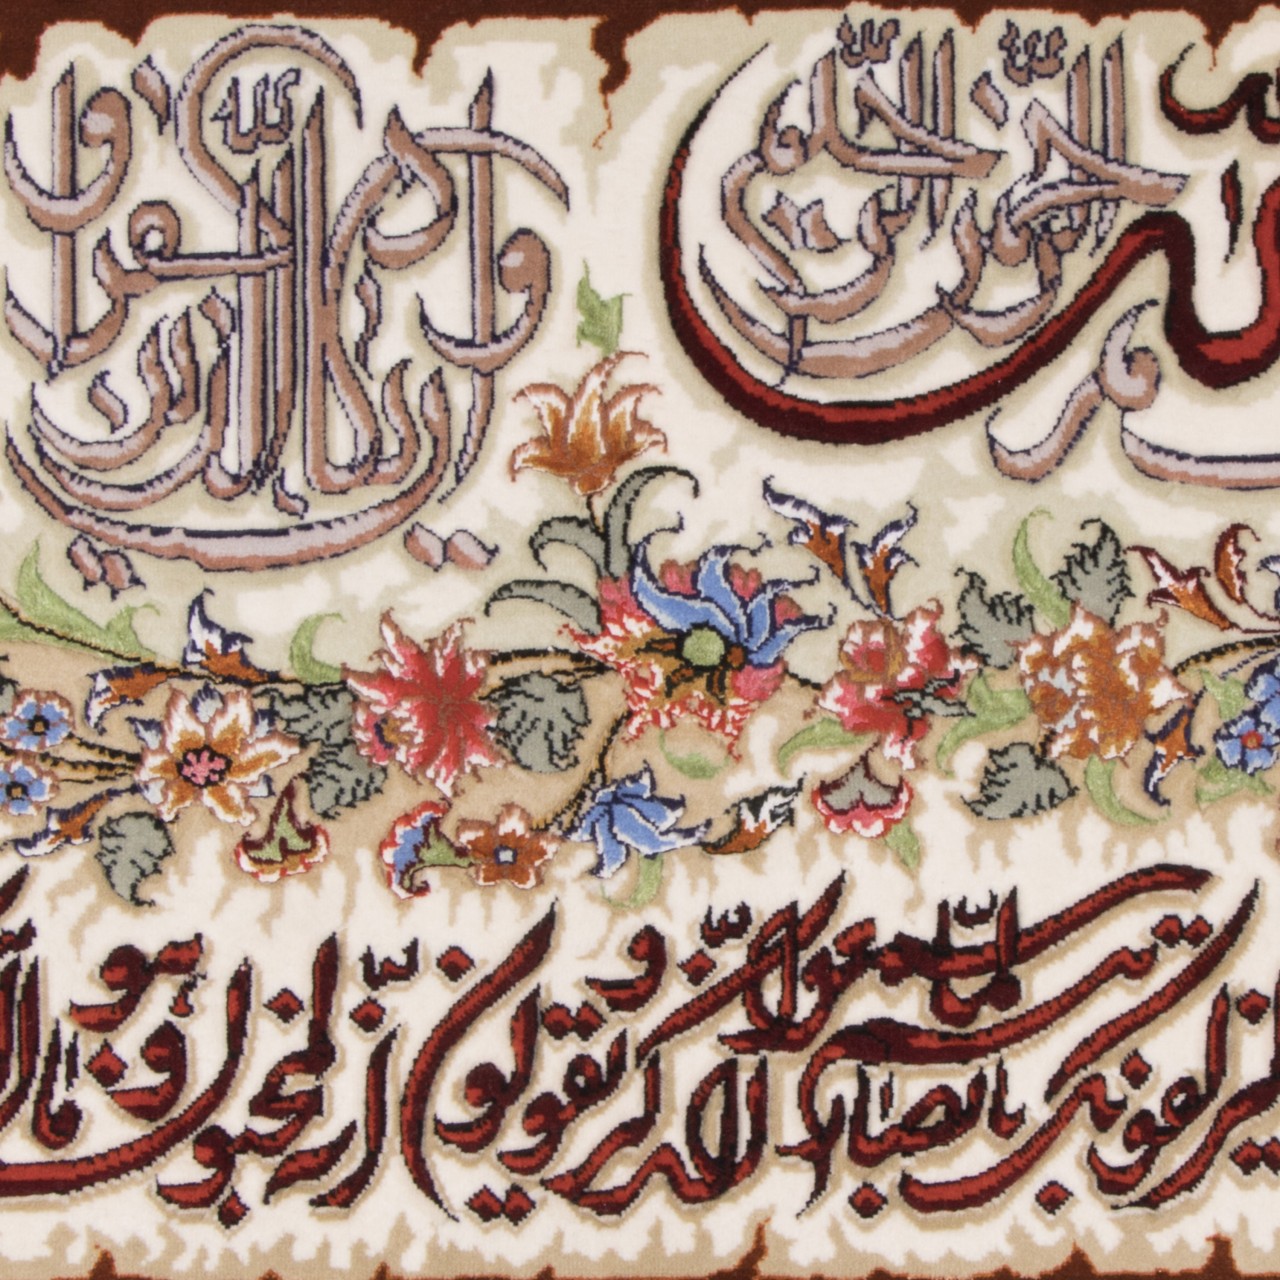 Pictorial Tabriz Carpet Ref: 901525